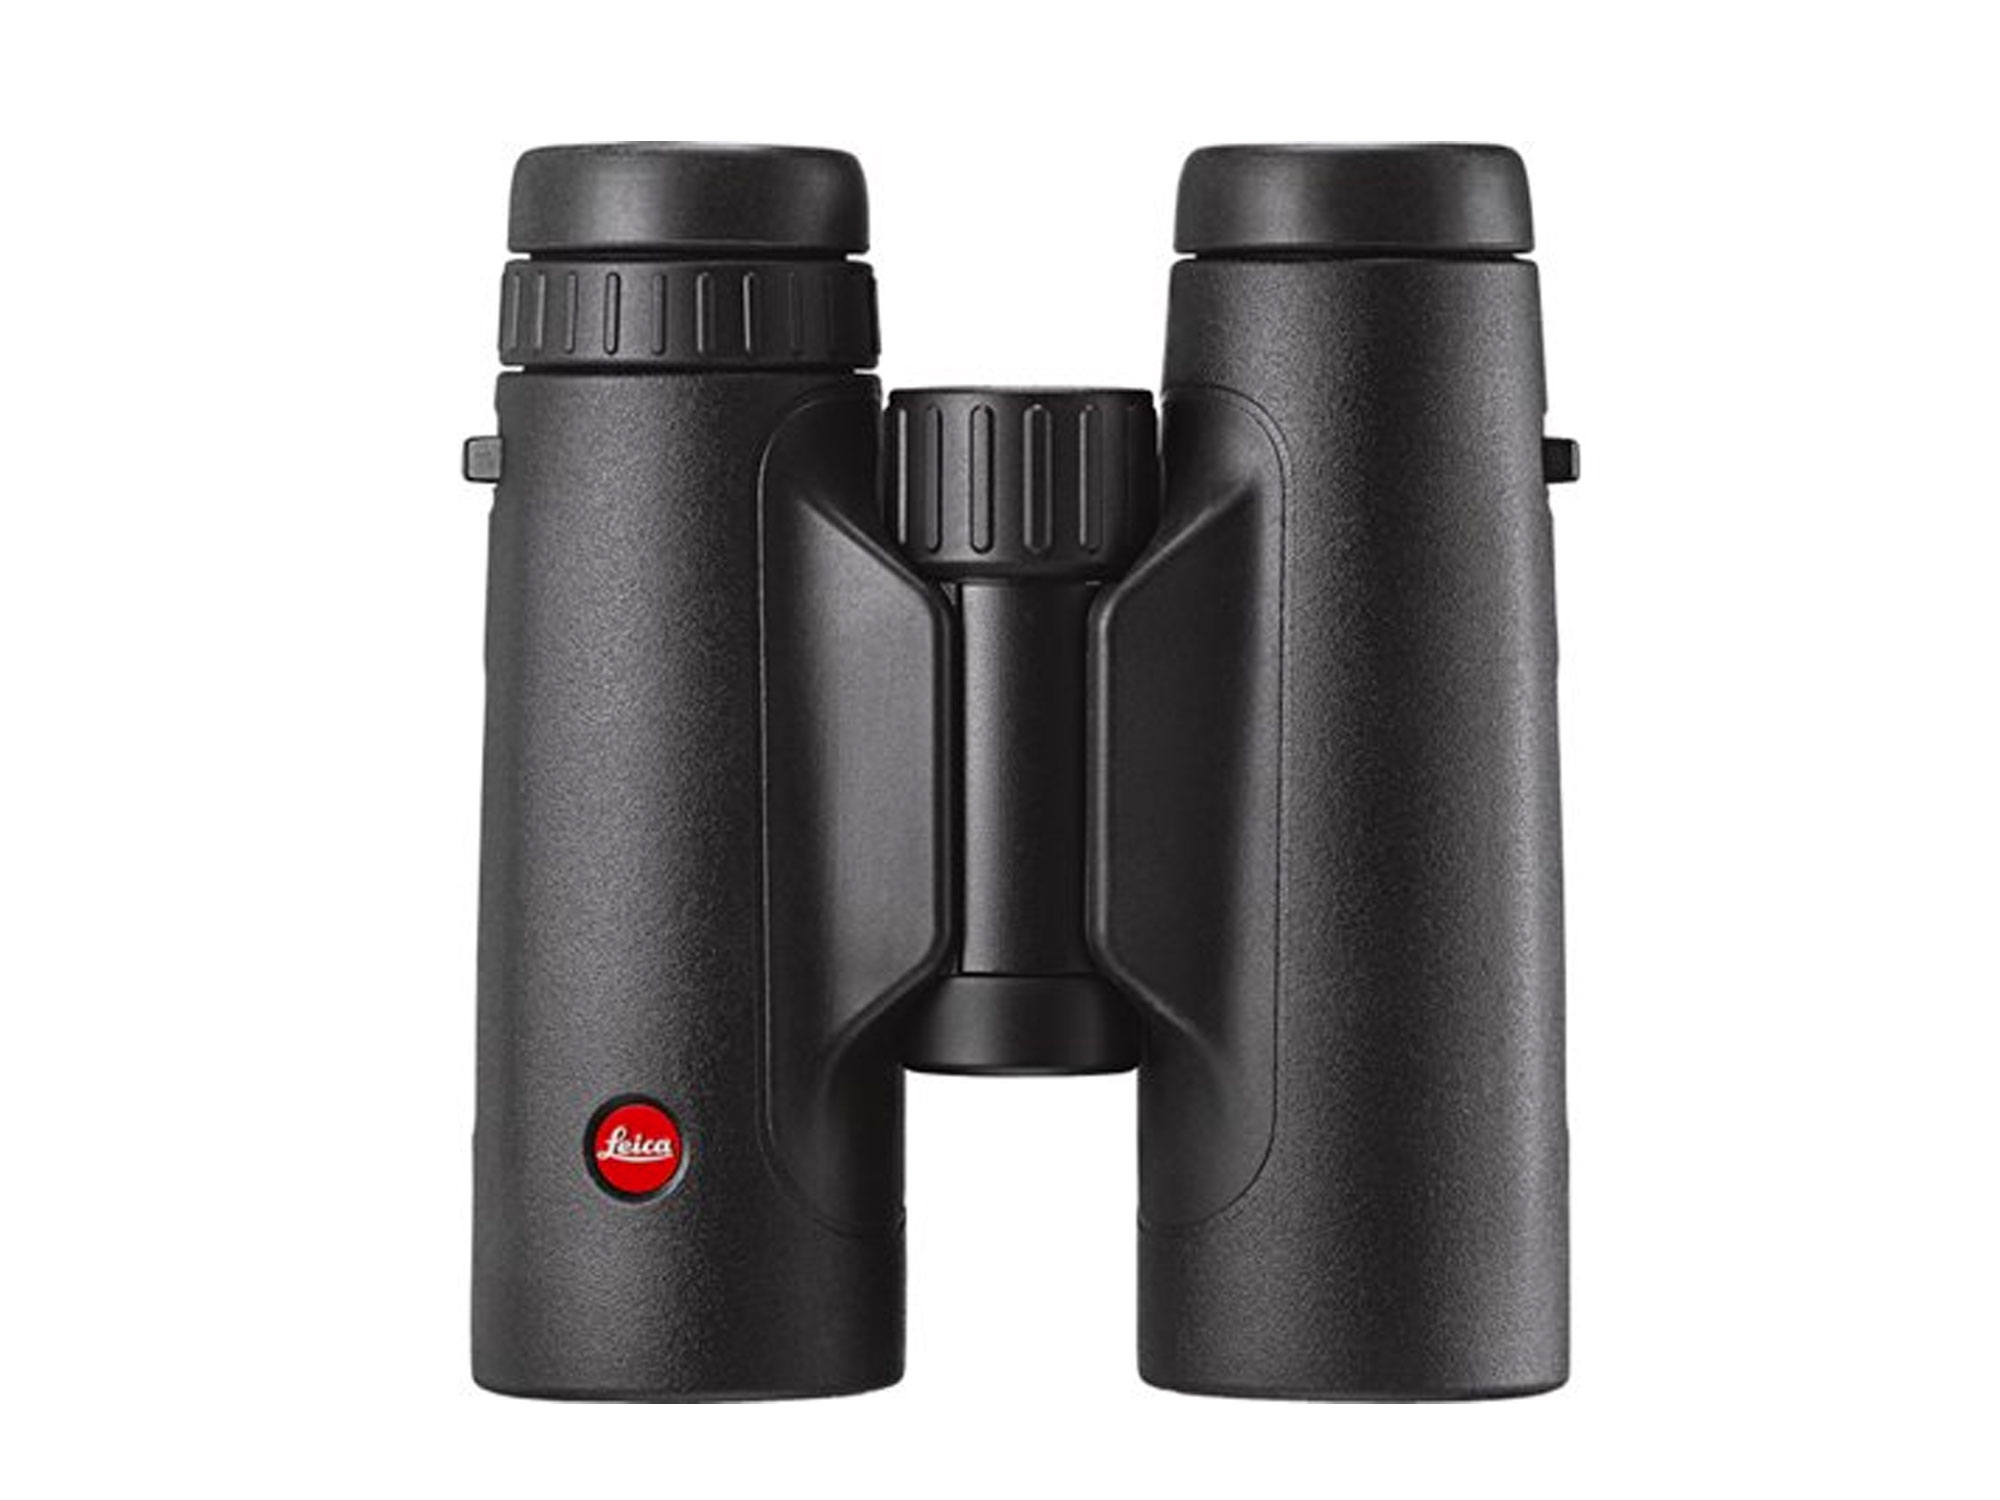 Leica binoculars